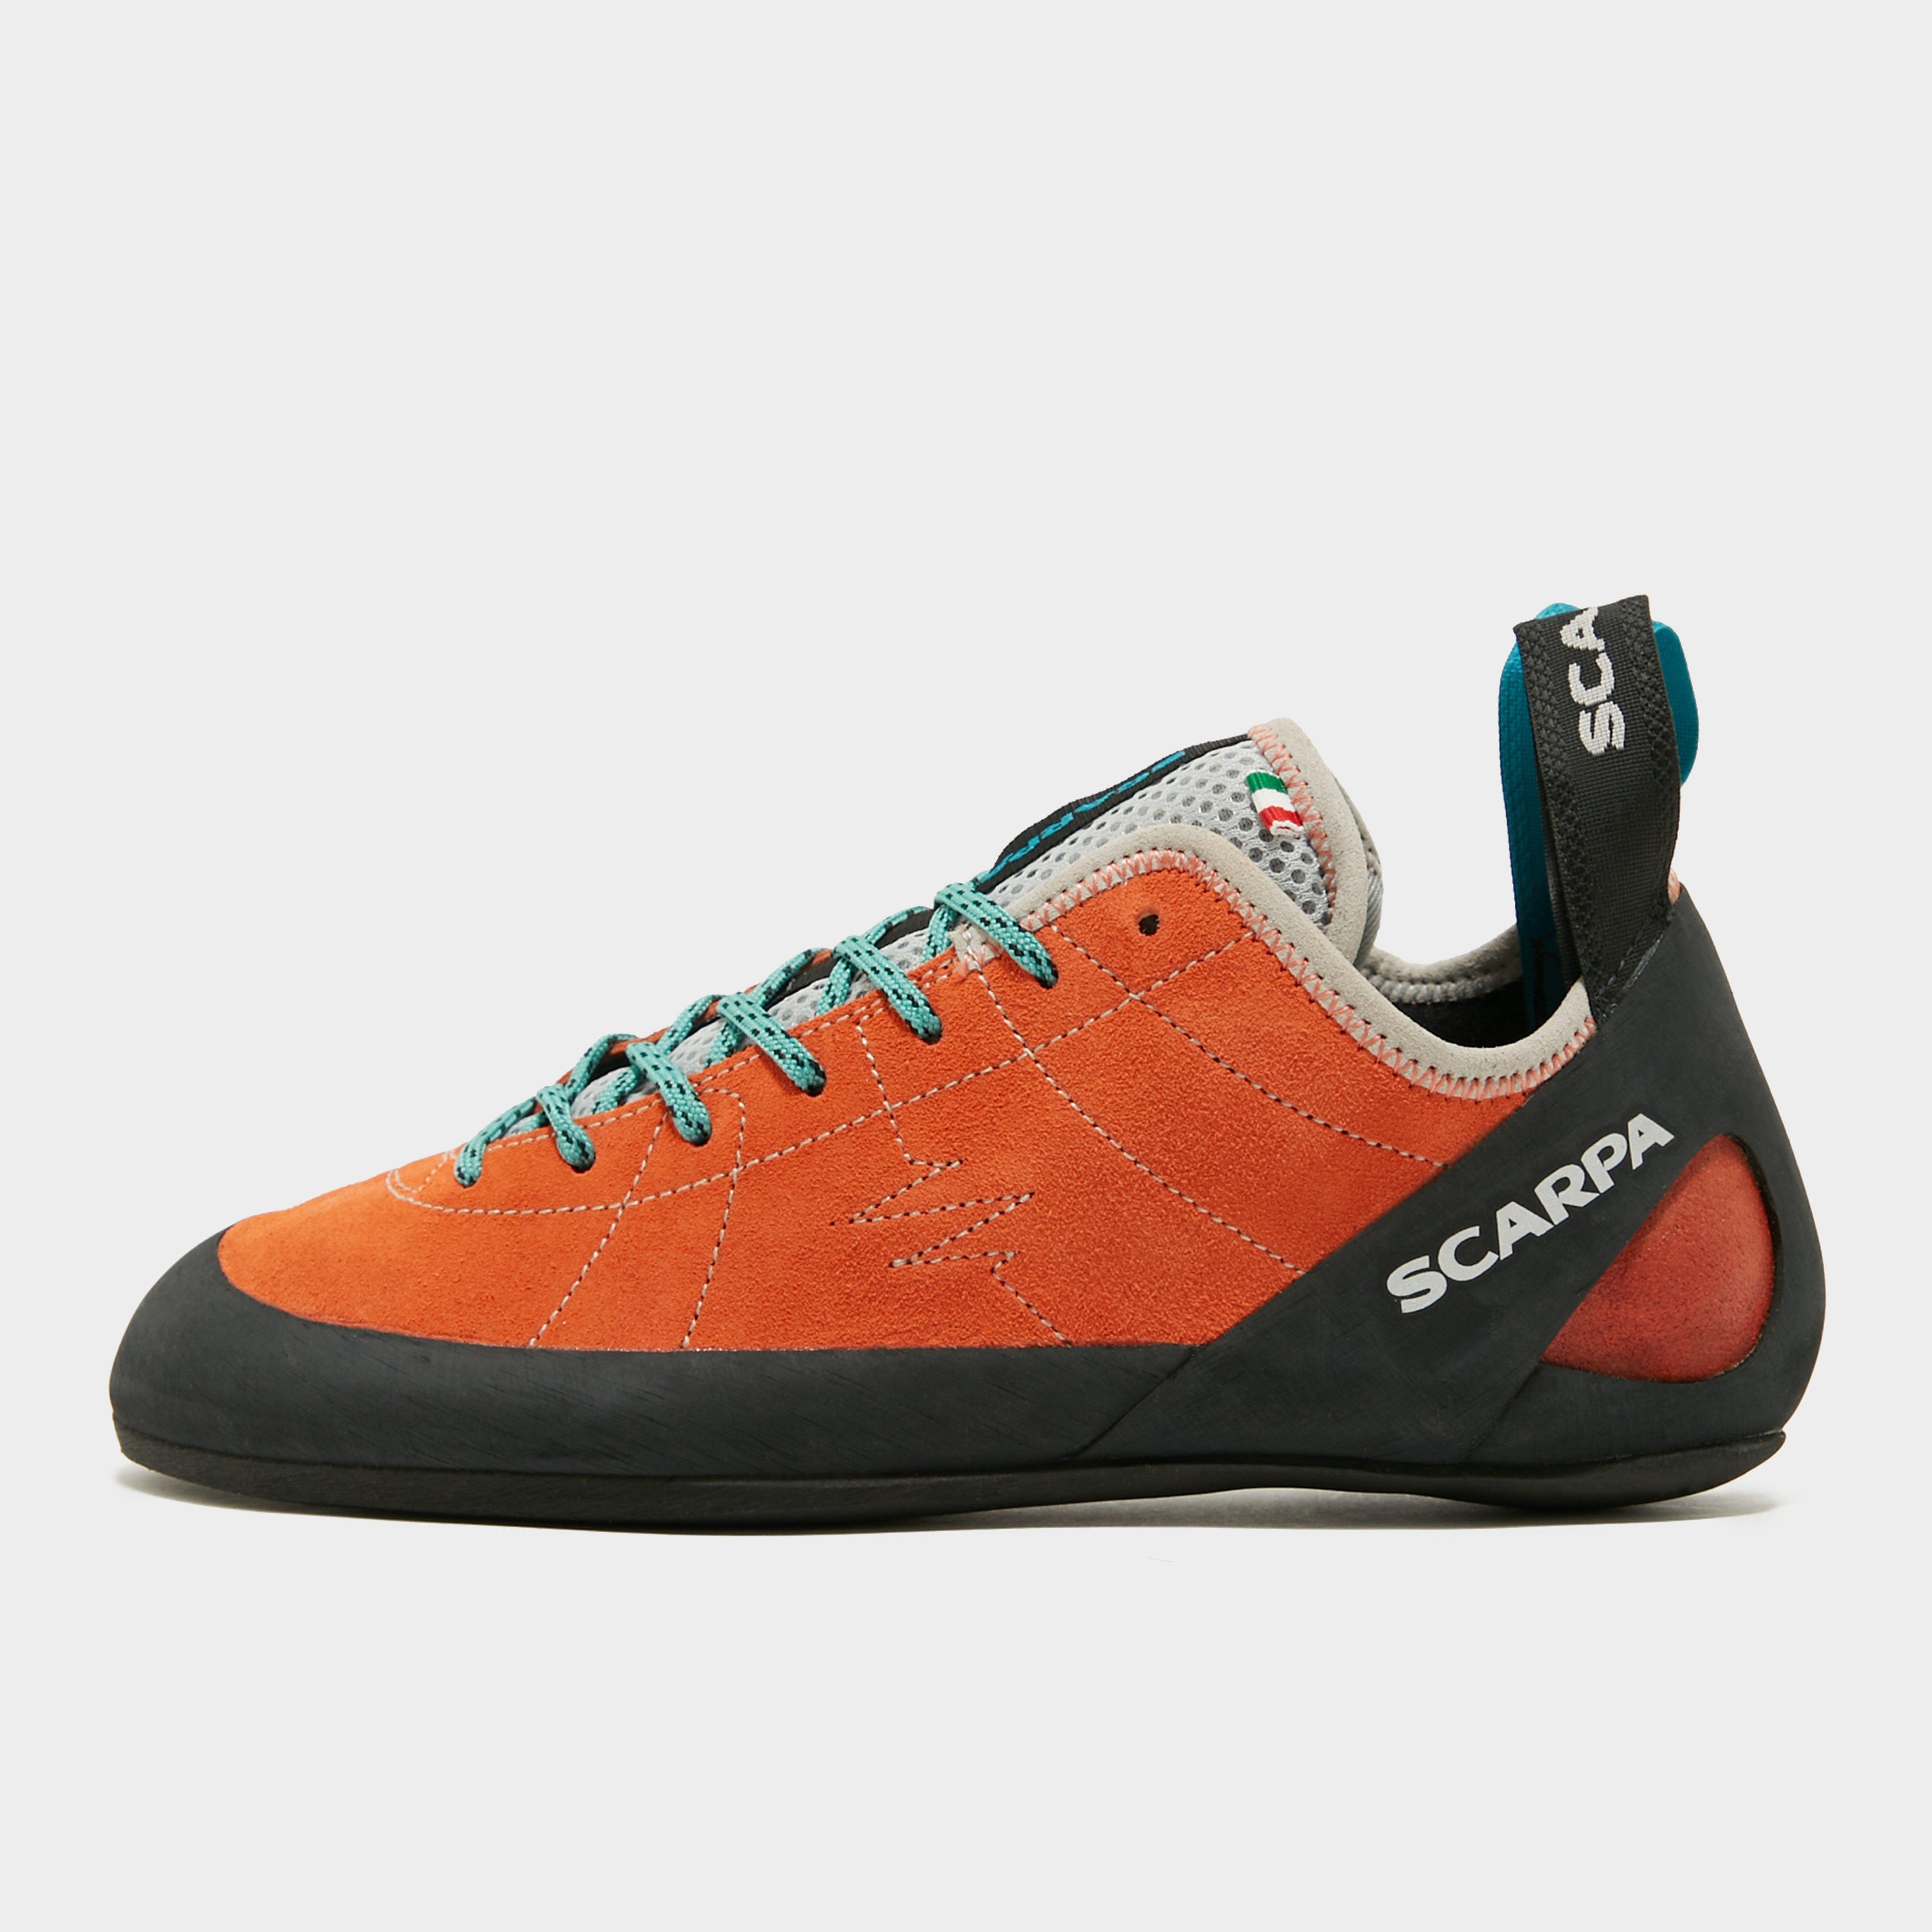 Scarpa Womens Helix Climbing Shoes - Orange/org  Orange/org